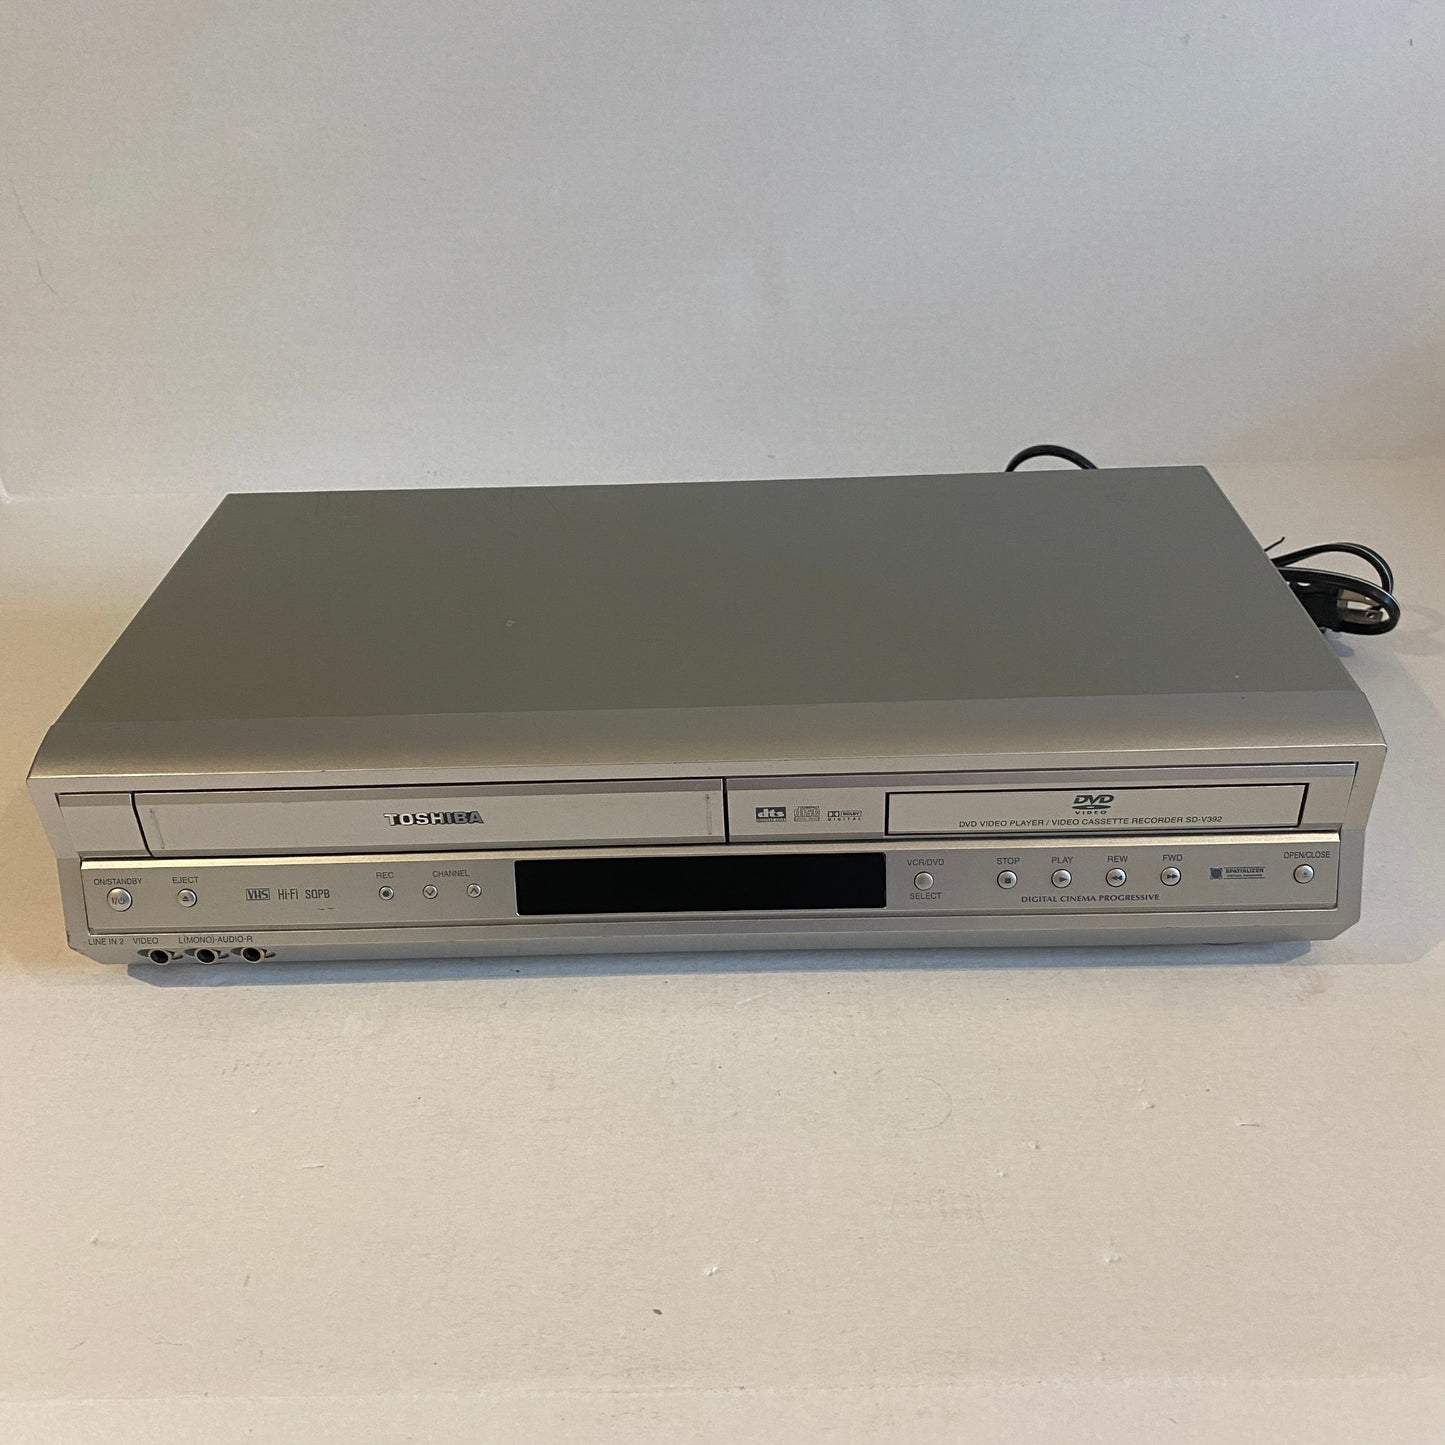 Toshiba Analog VCR DVD Combo Player Recorder - SD-V392